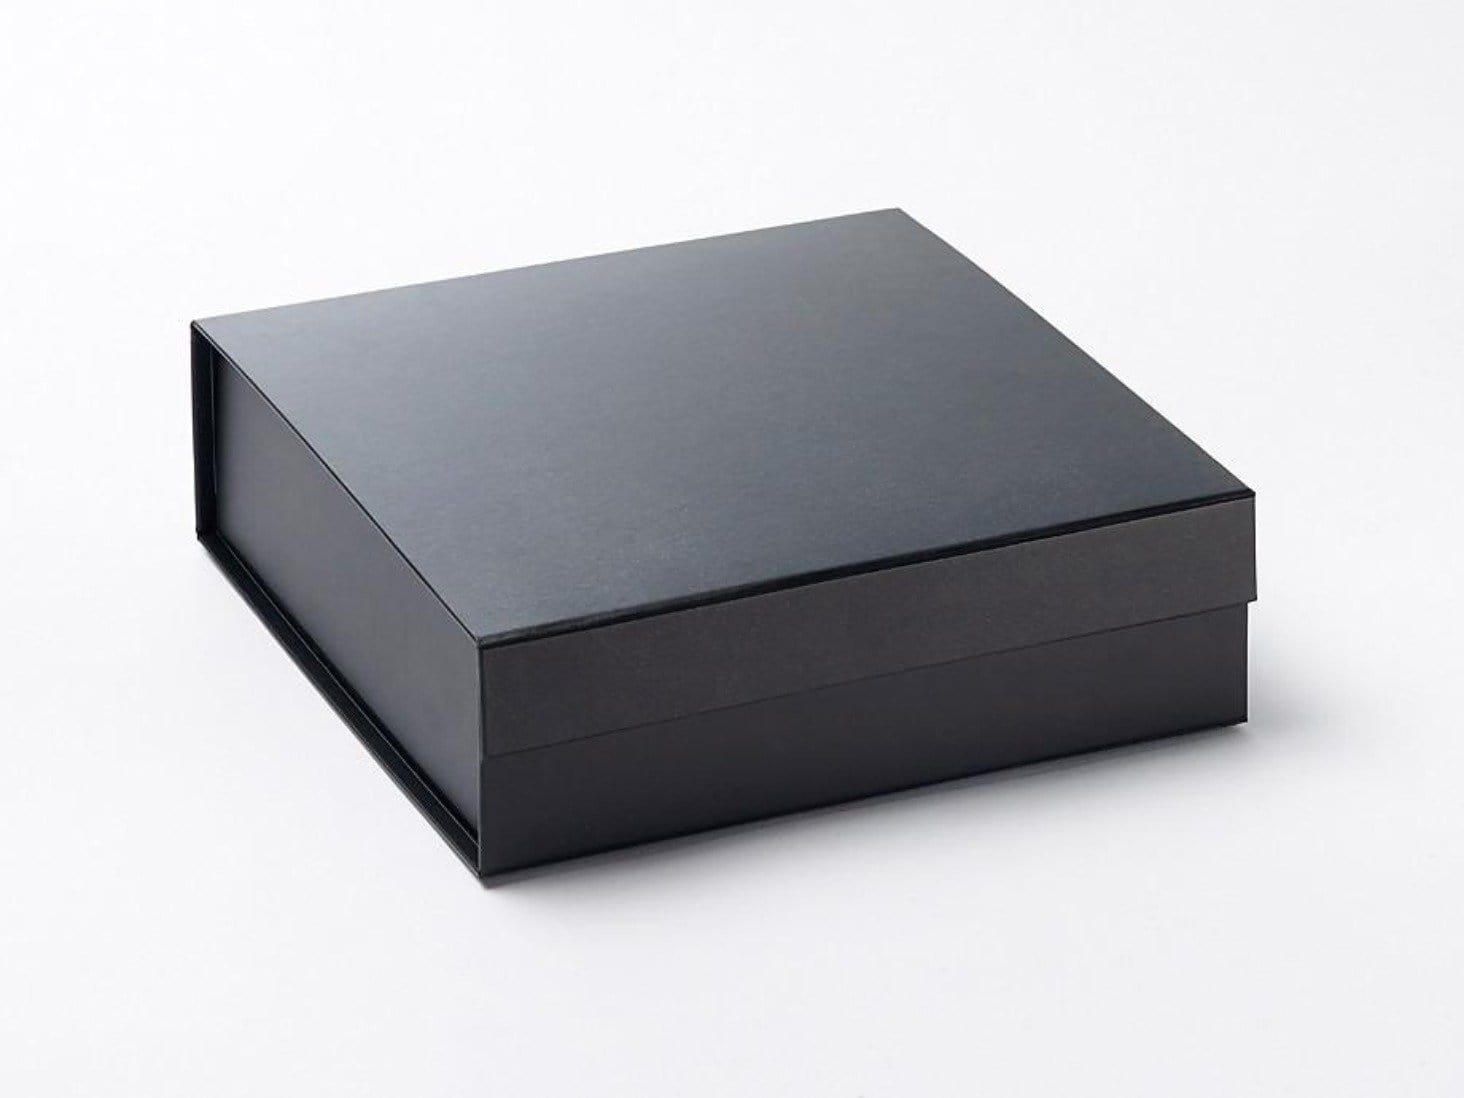 Medium Black Presentation Hamper Gift Boxes from Foldabox